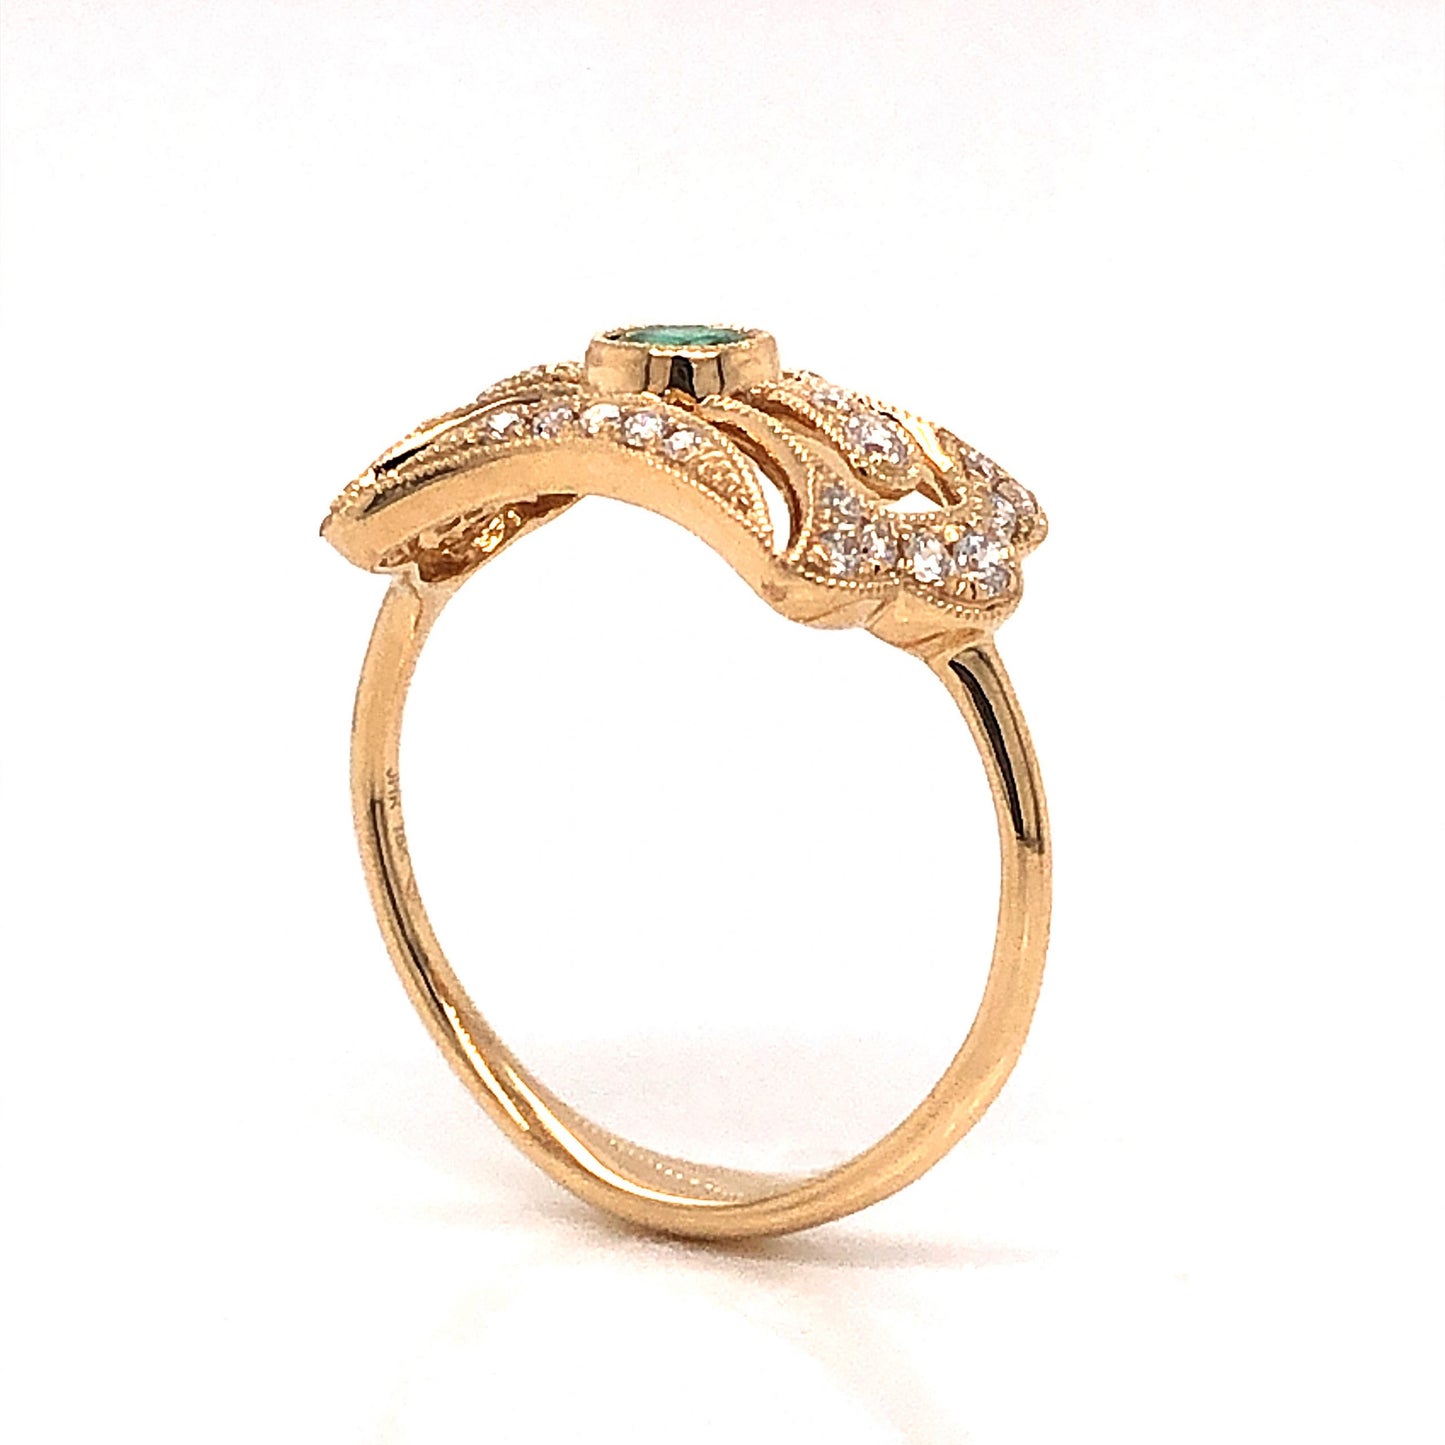 Art Deco Inspired Emerald & Diamond Ring in 18k Yellow Gold